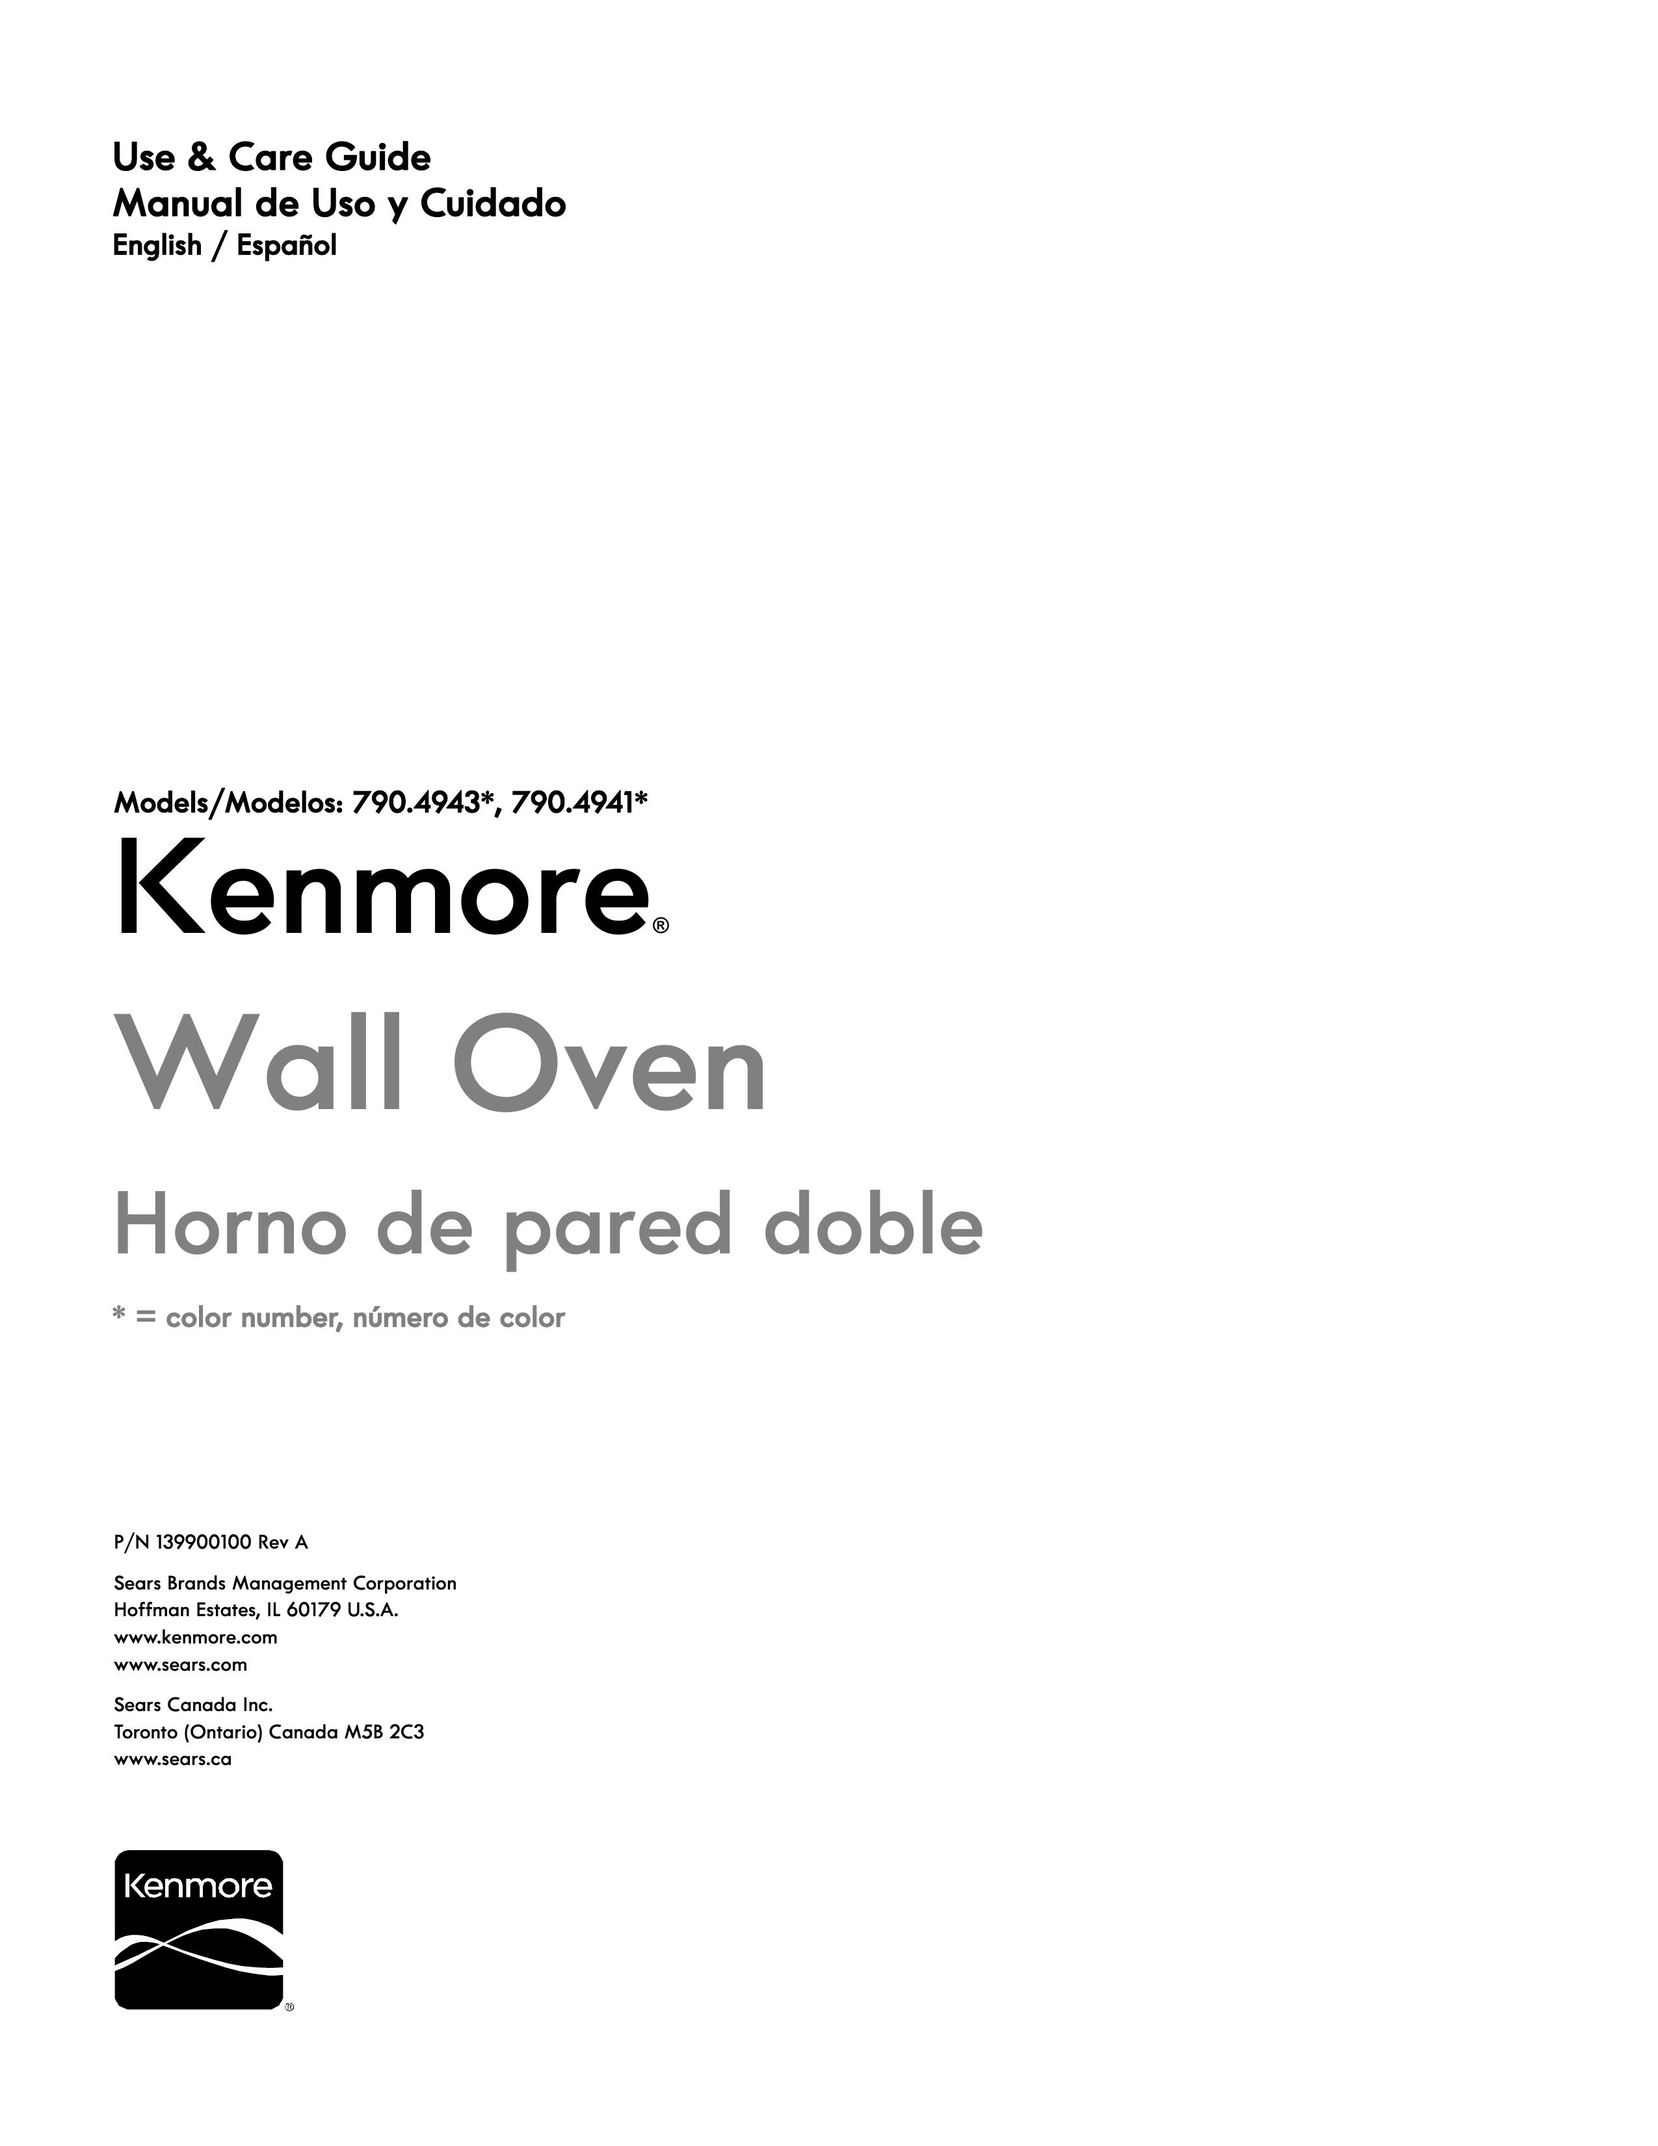 Kenmore 790.4943 Oven User Manual